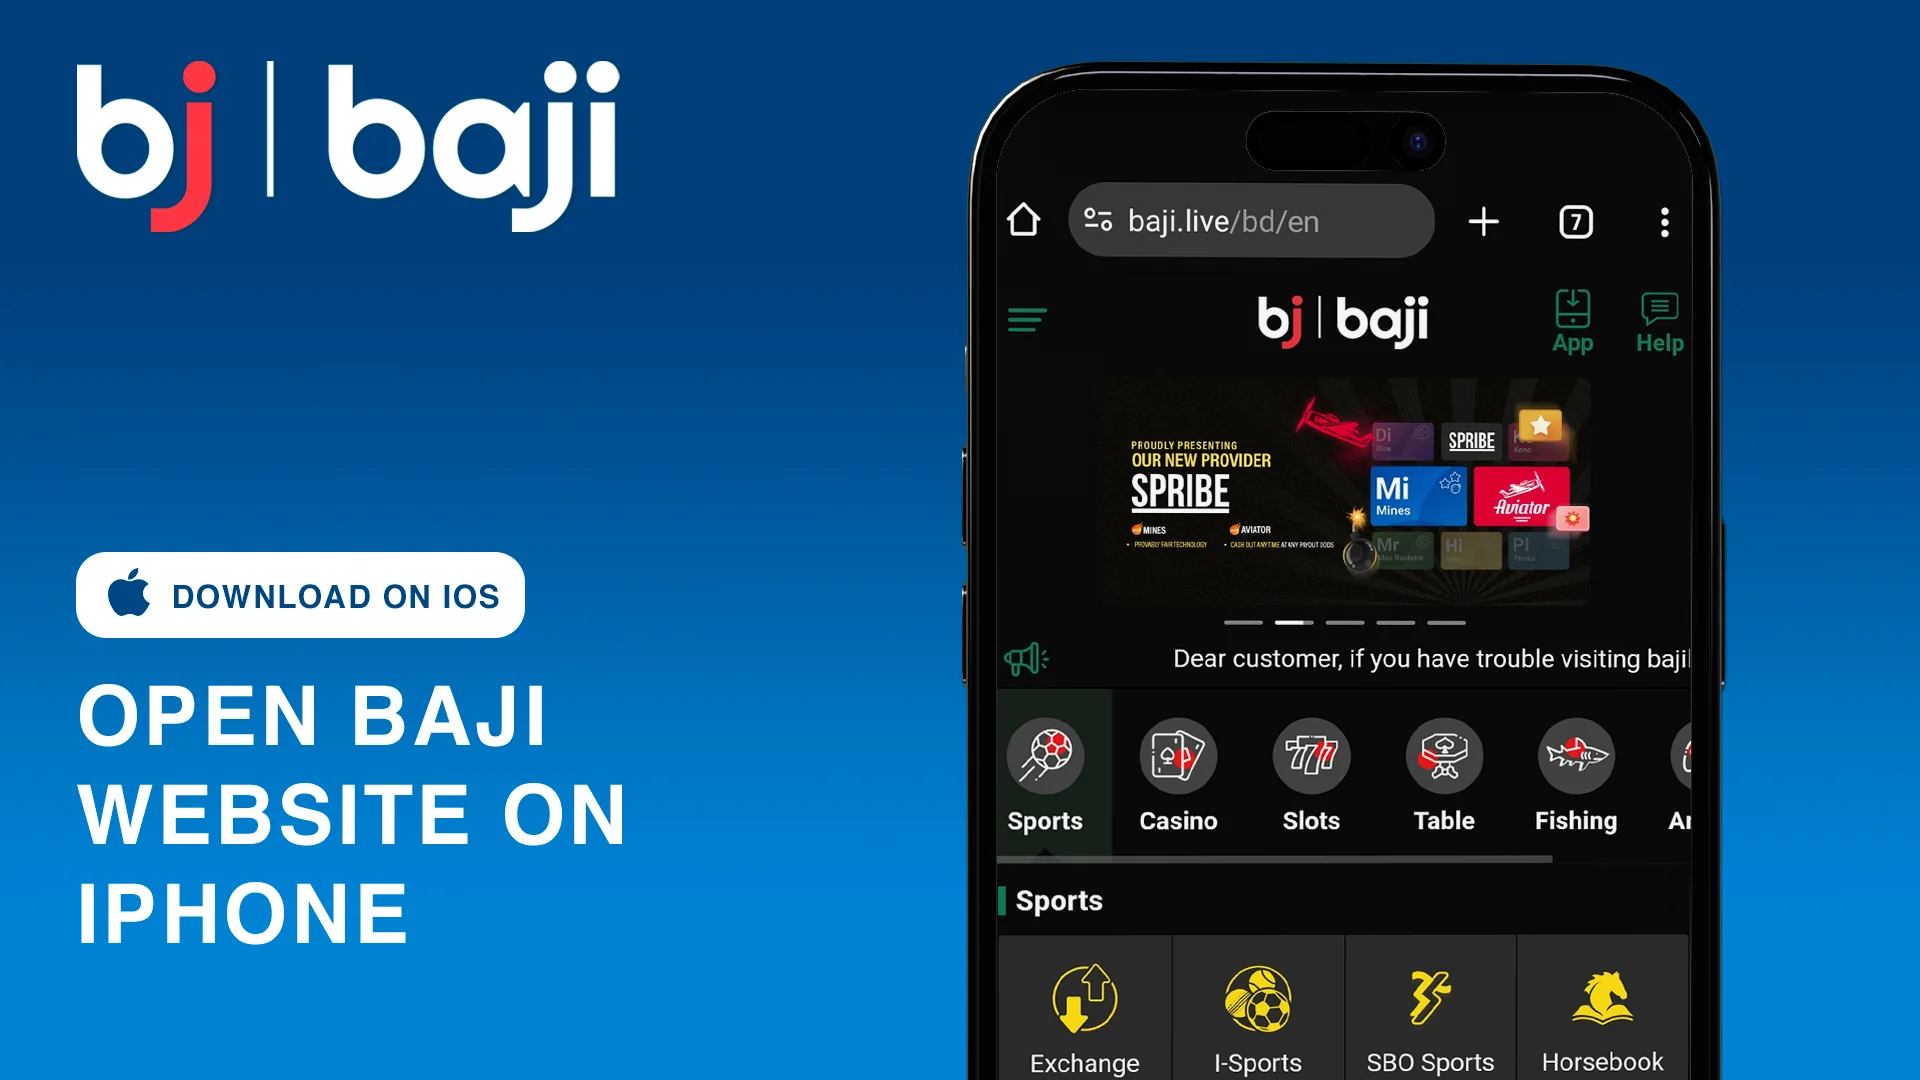 Open Baji Mobile App on iPhone